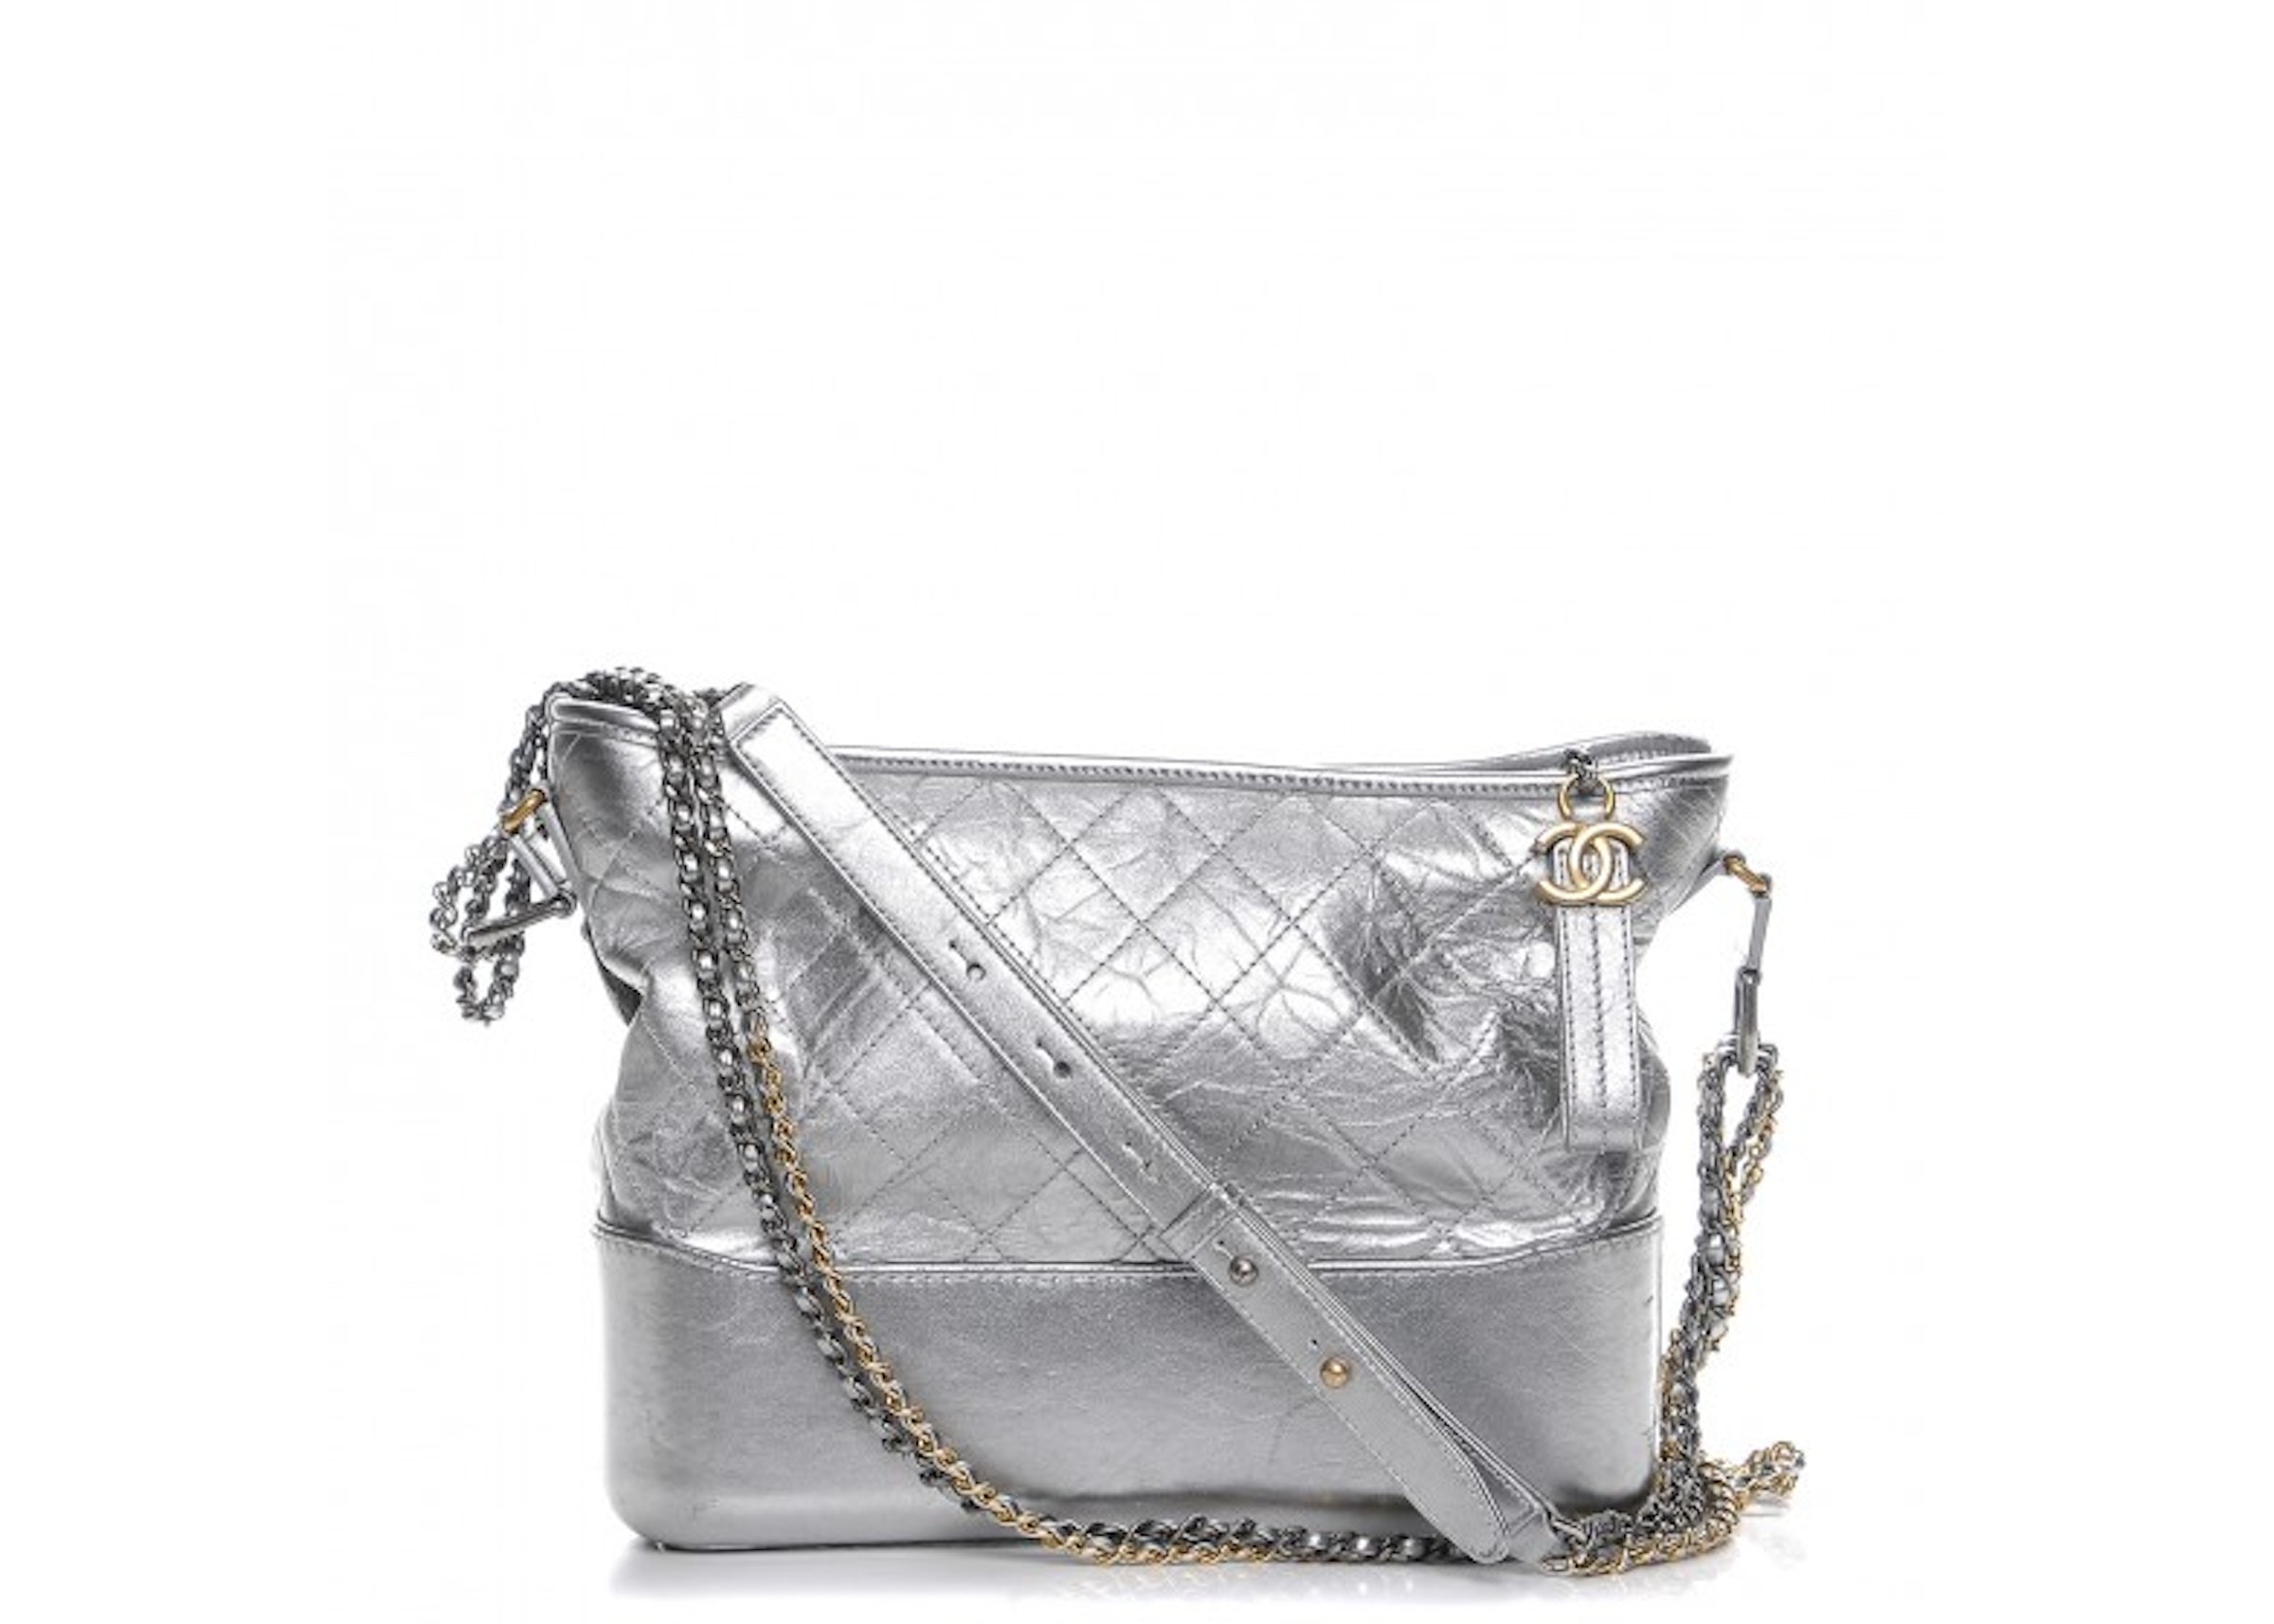 black and white chanel handbags new